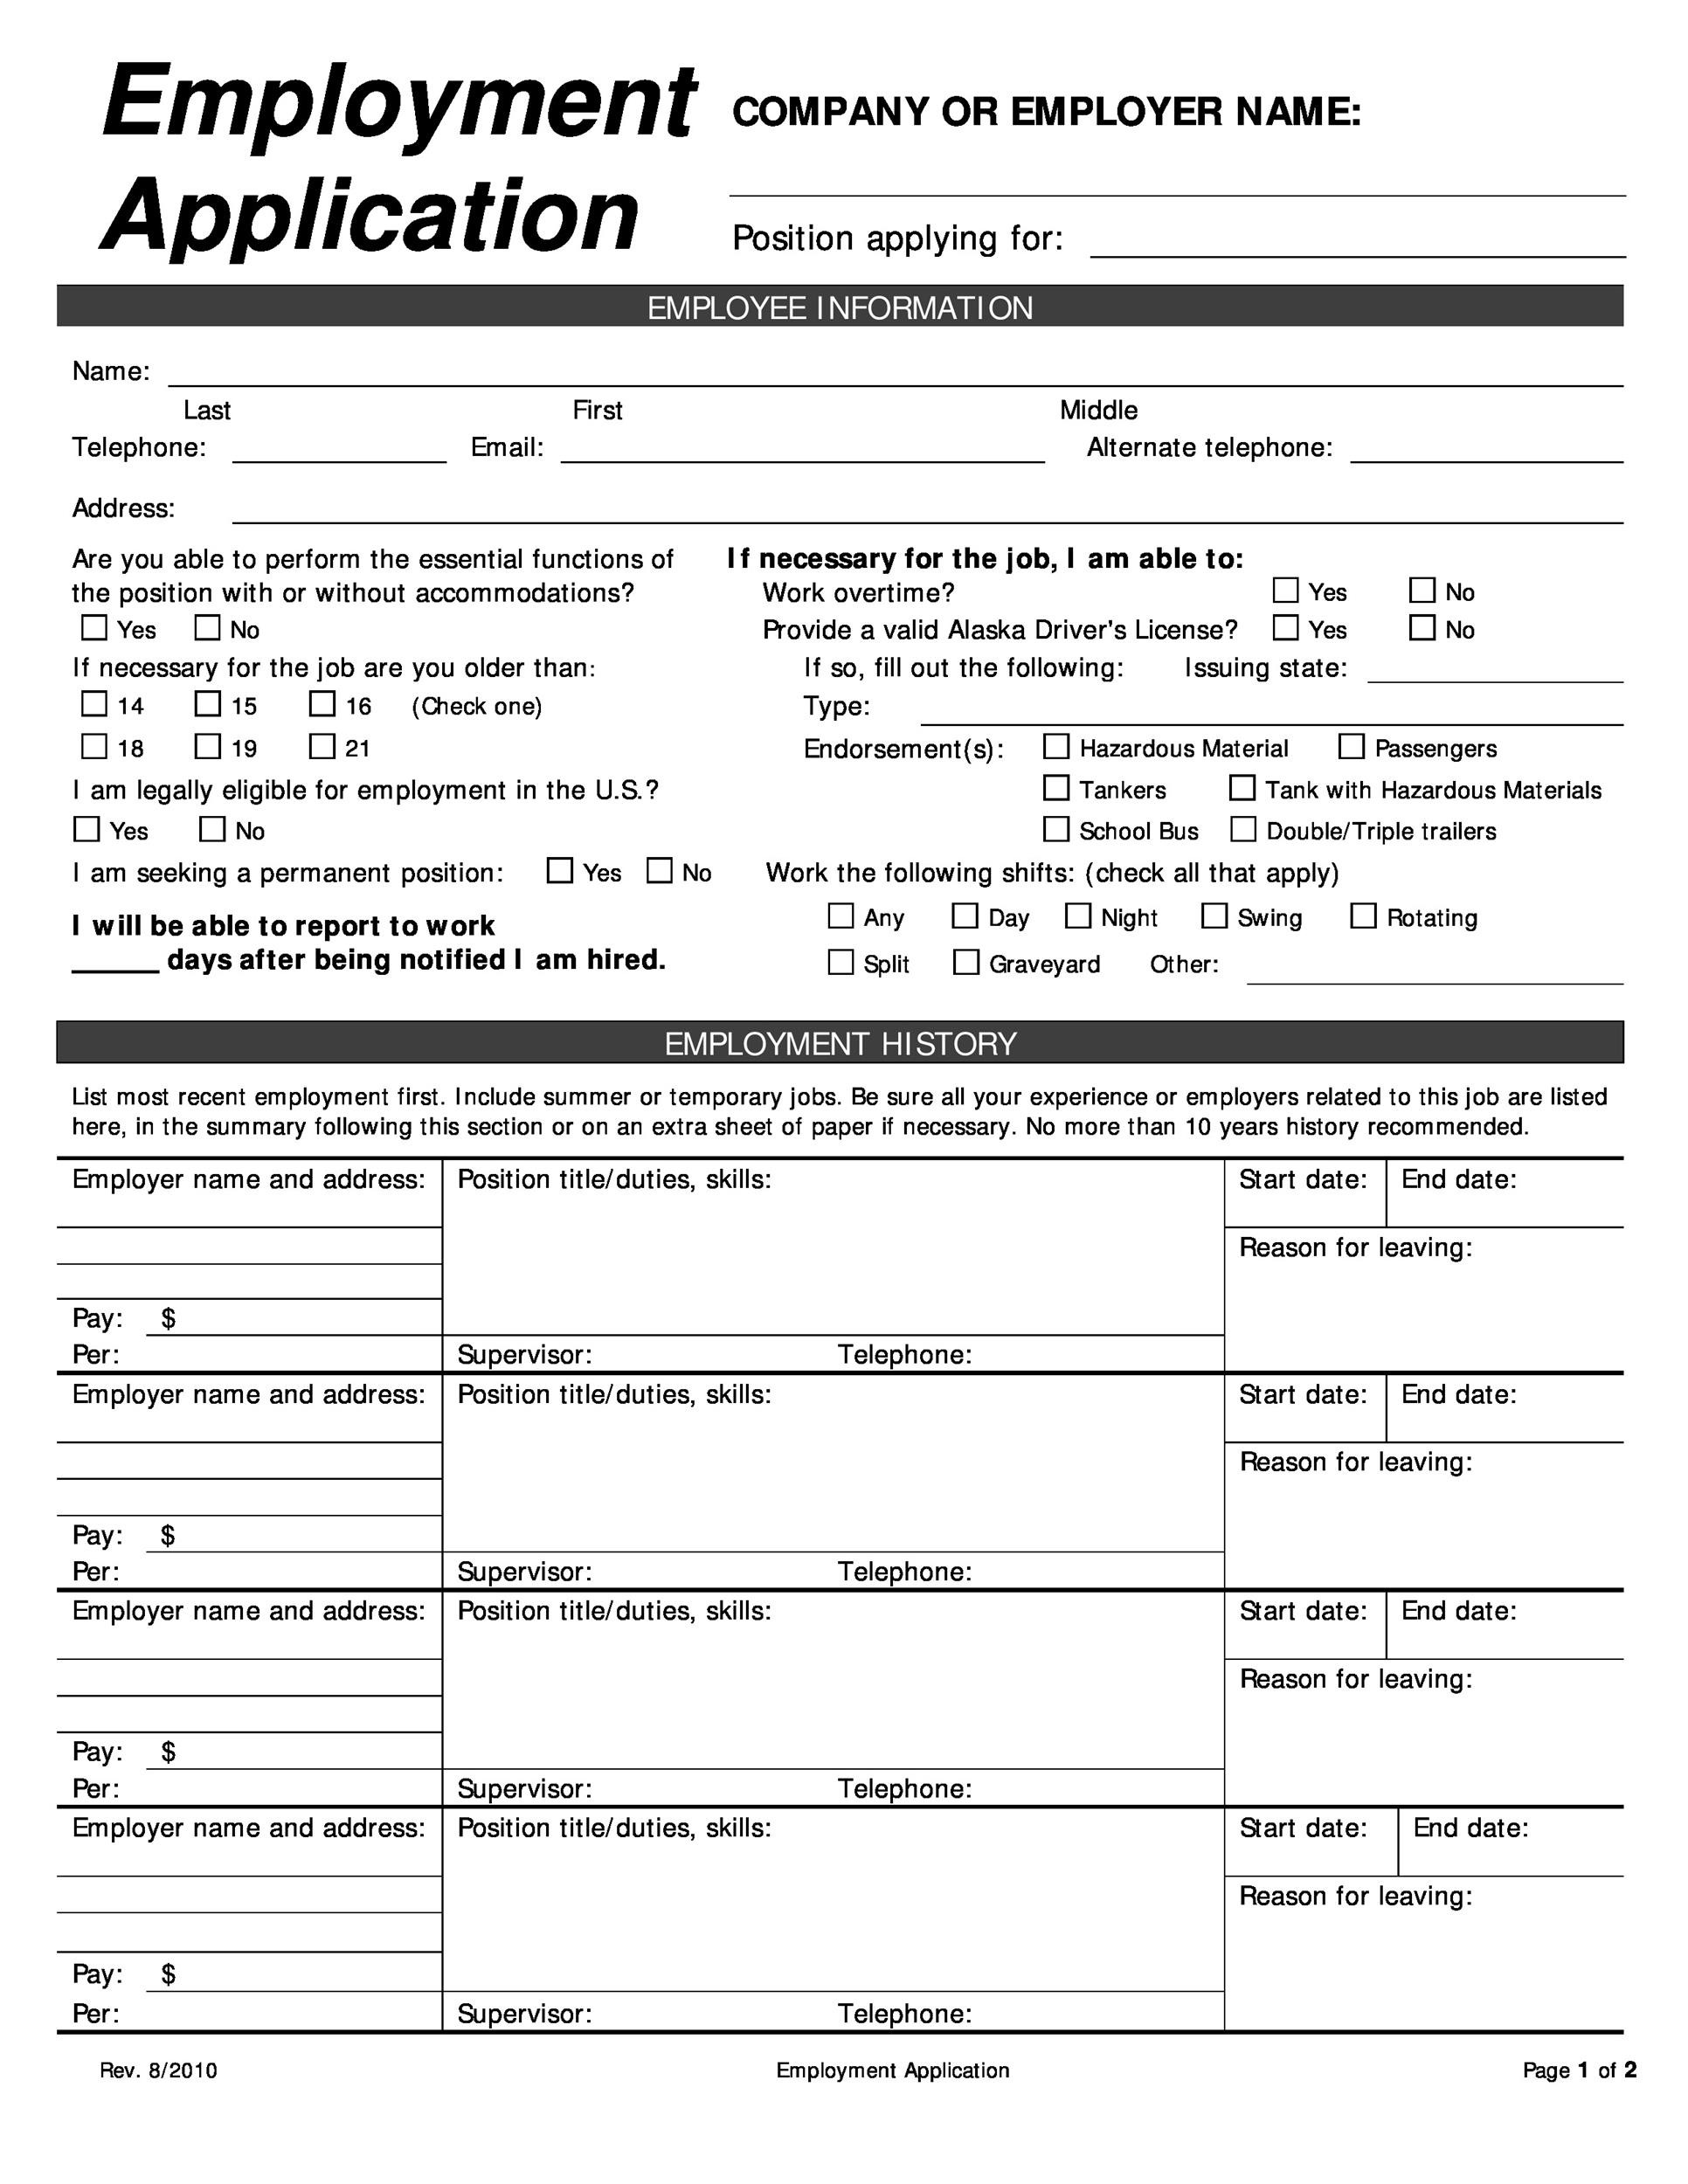 Print Employment Application Form